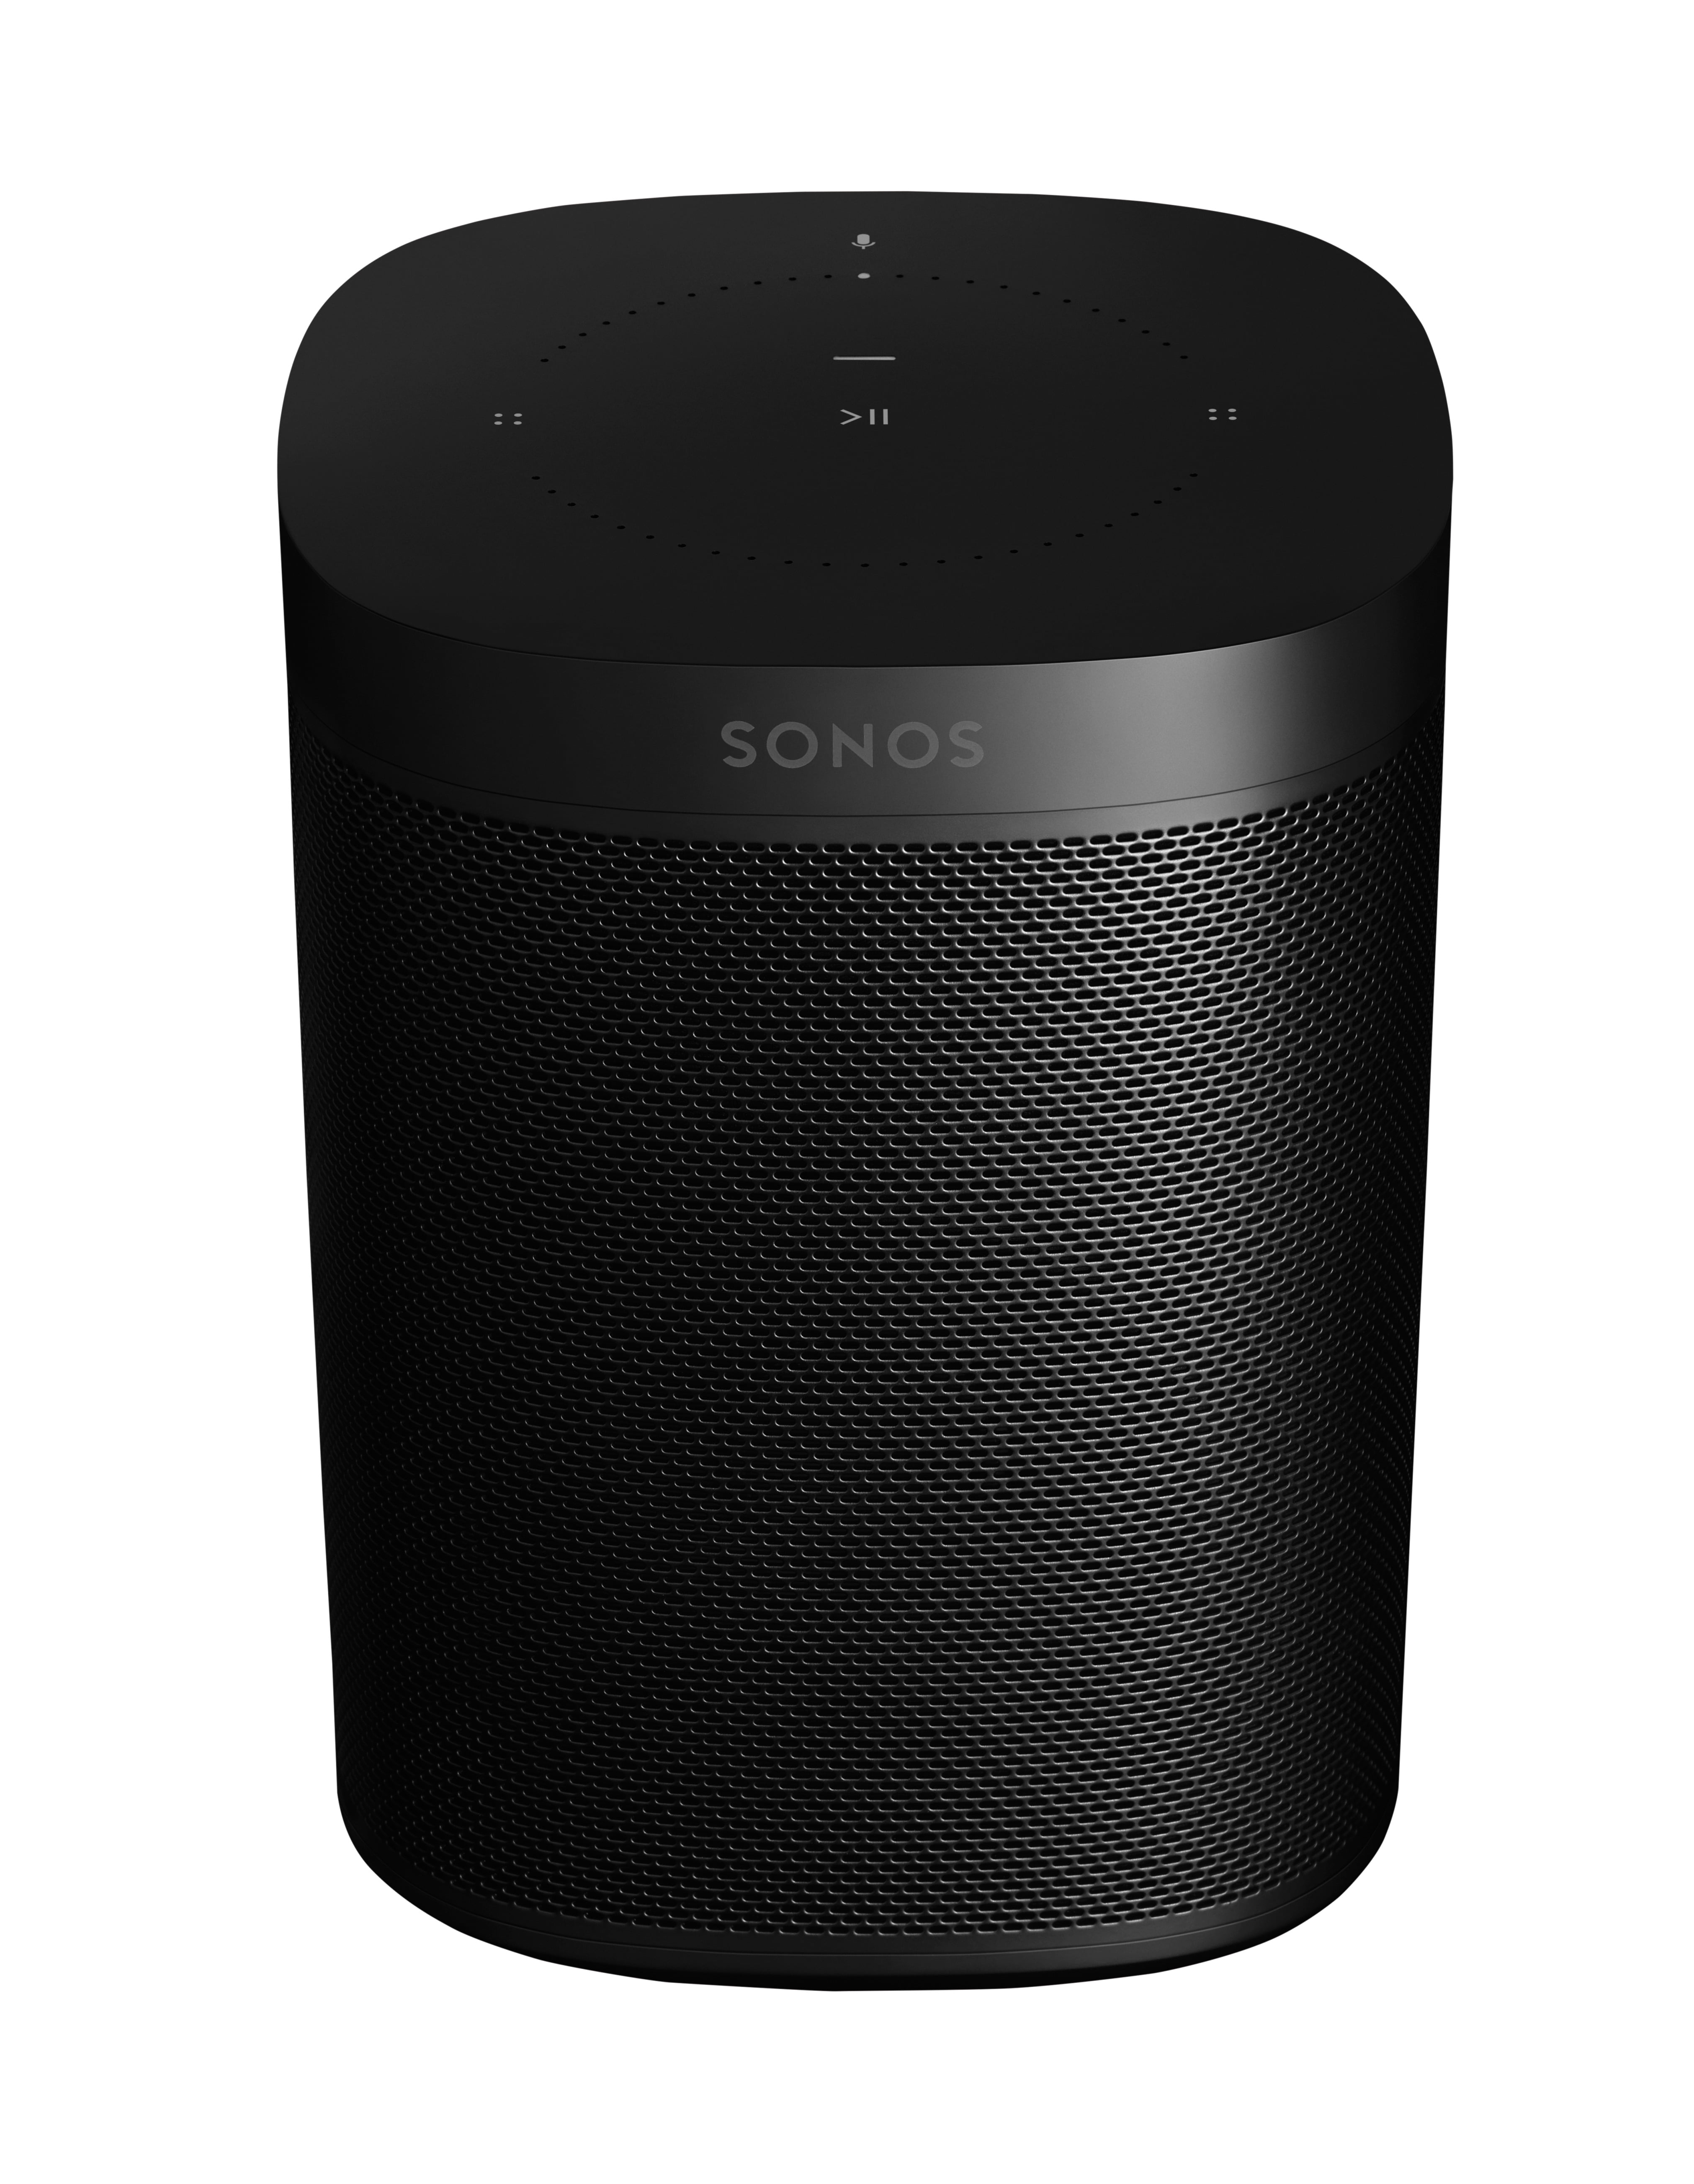 Sonos Two Room Set with Sonos One Gen - Smart Speaker with Voice Control Built-In(Black) Walmart.com